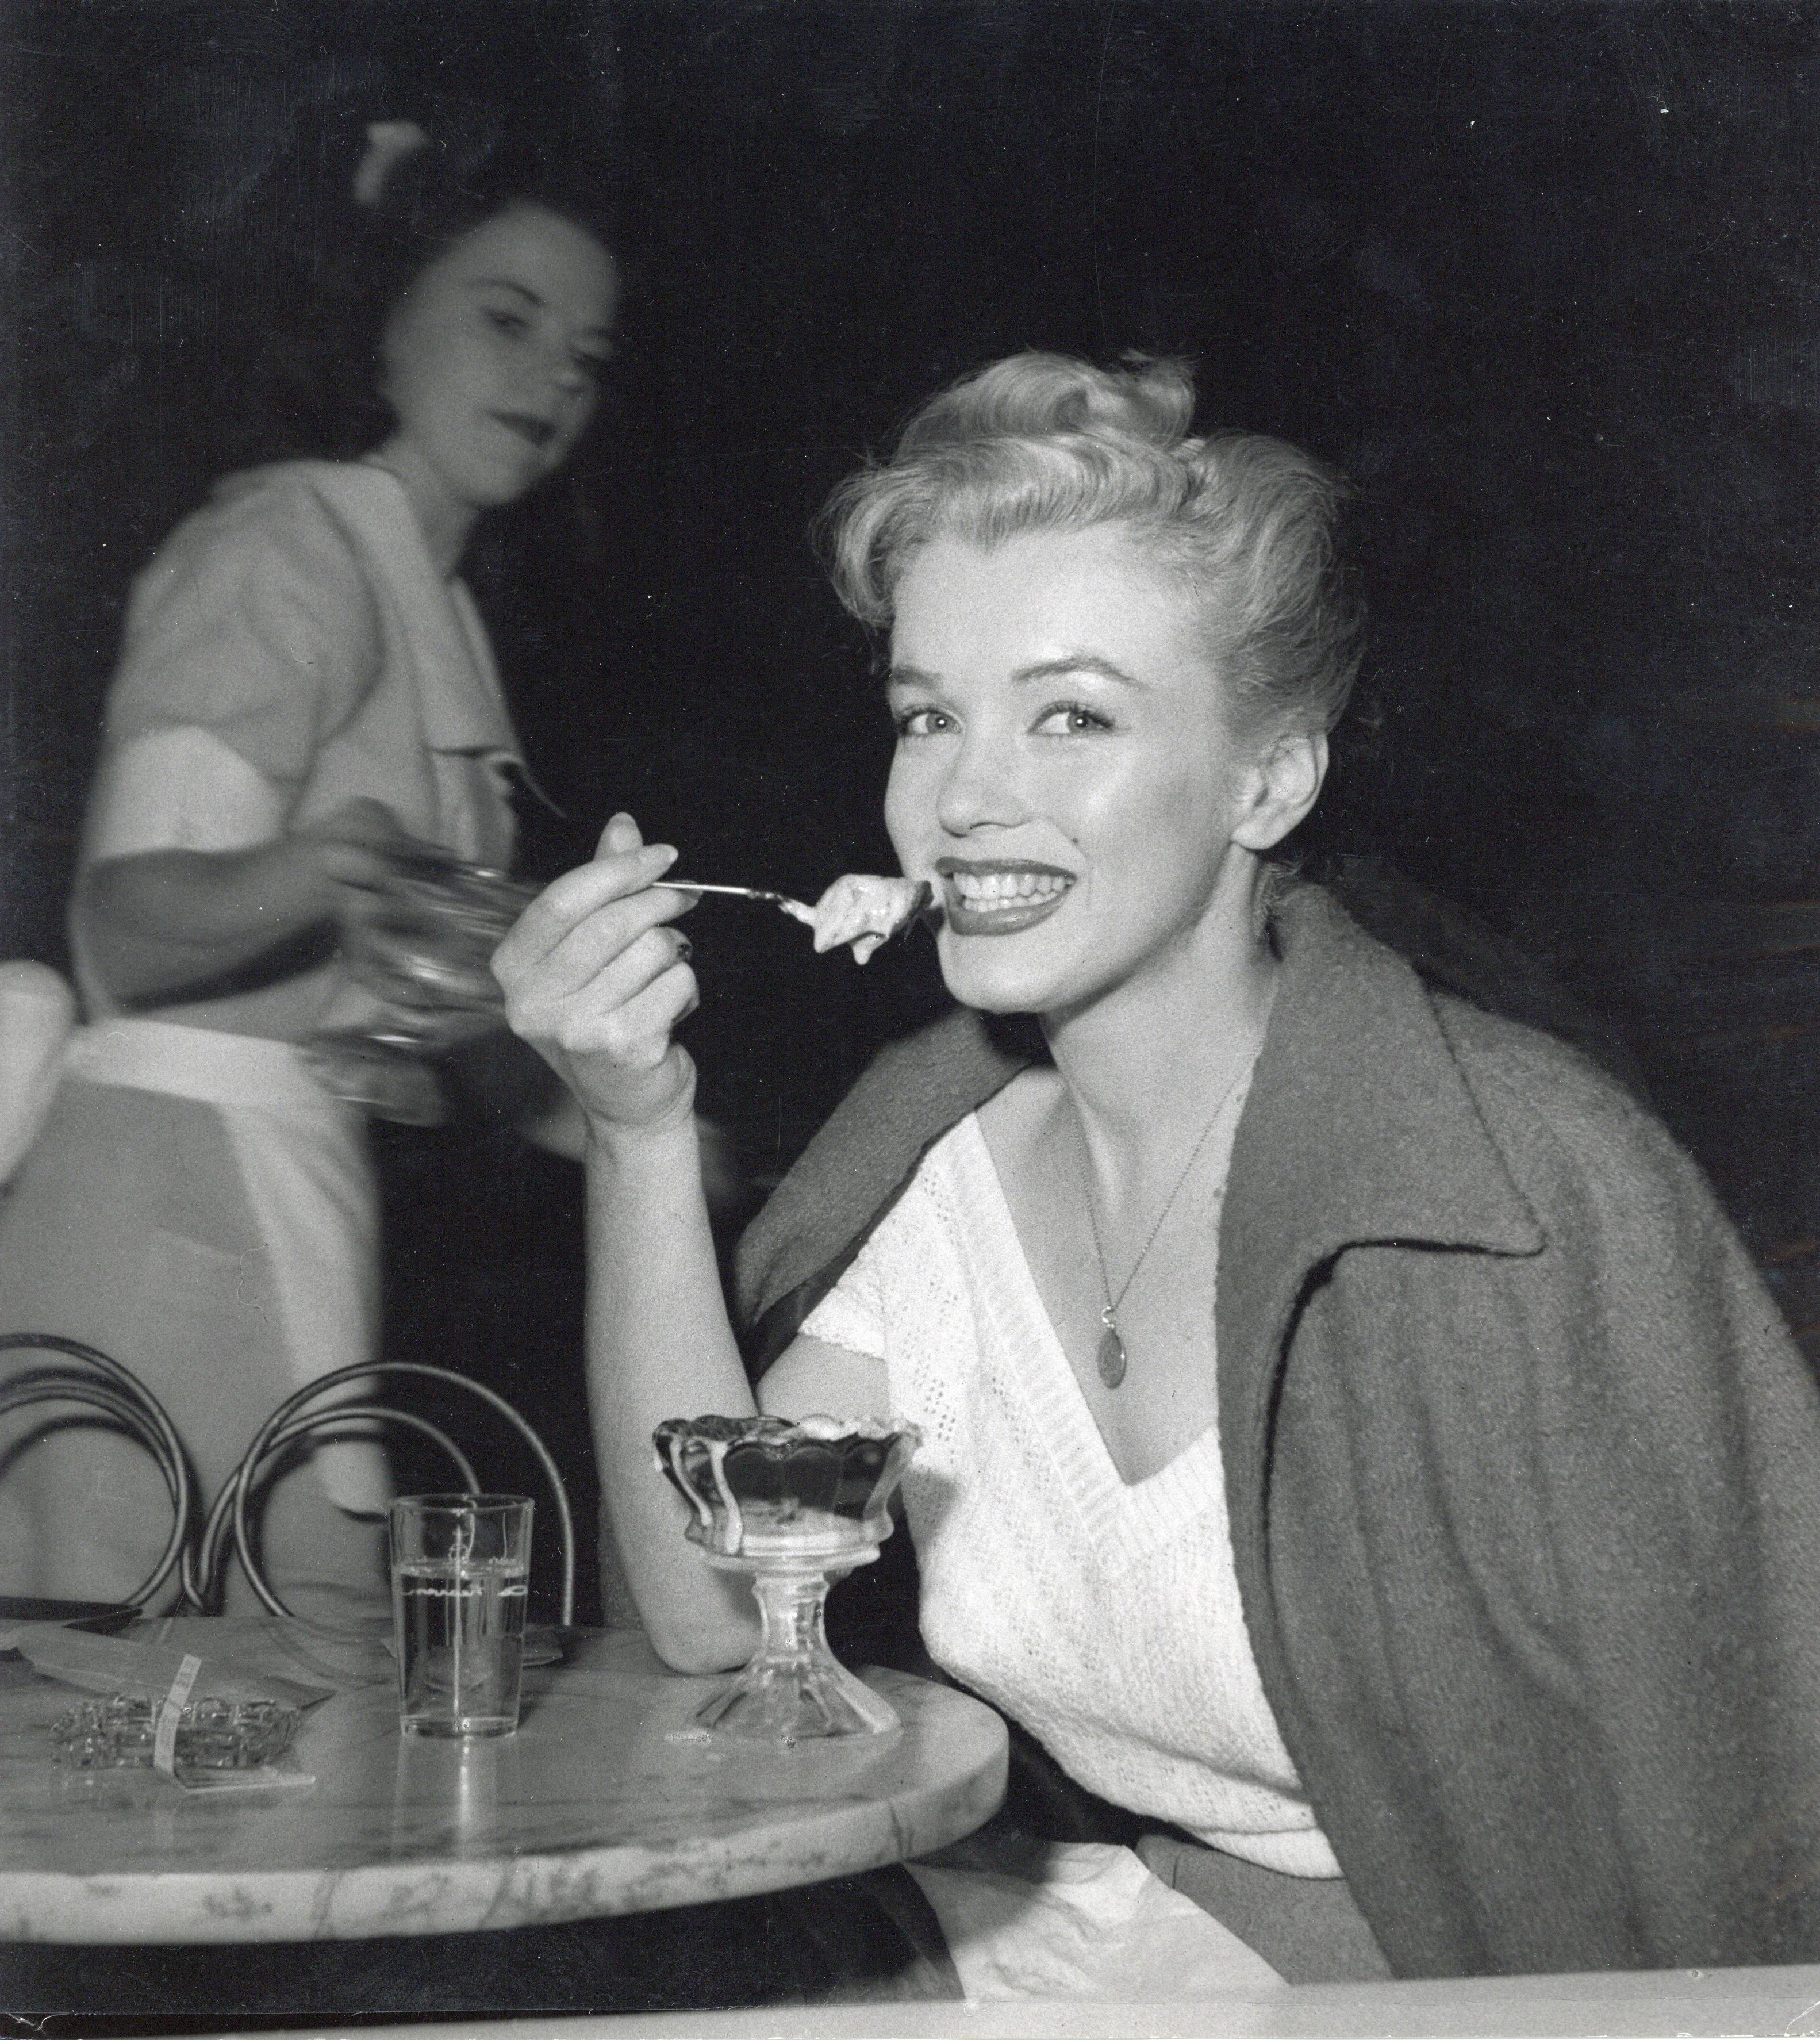 Andre de Dienes Portrait Photograph - Marilyn Monroe Eating Ice Cream Vintage Original Photograph